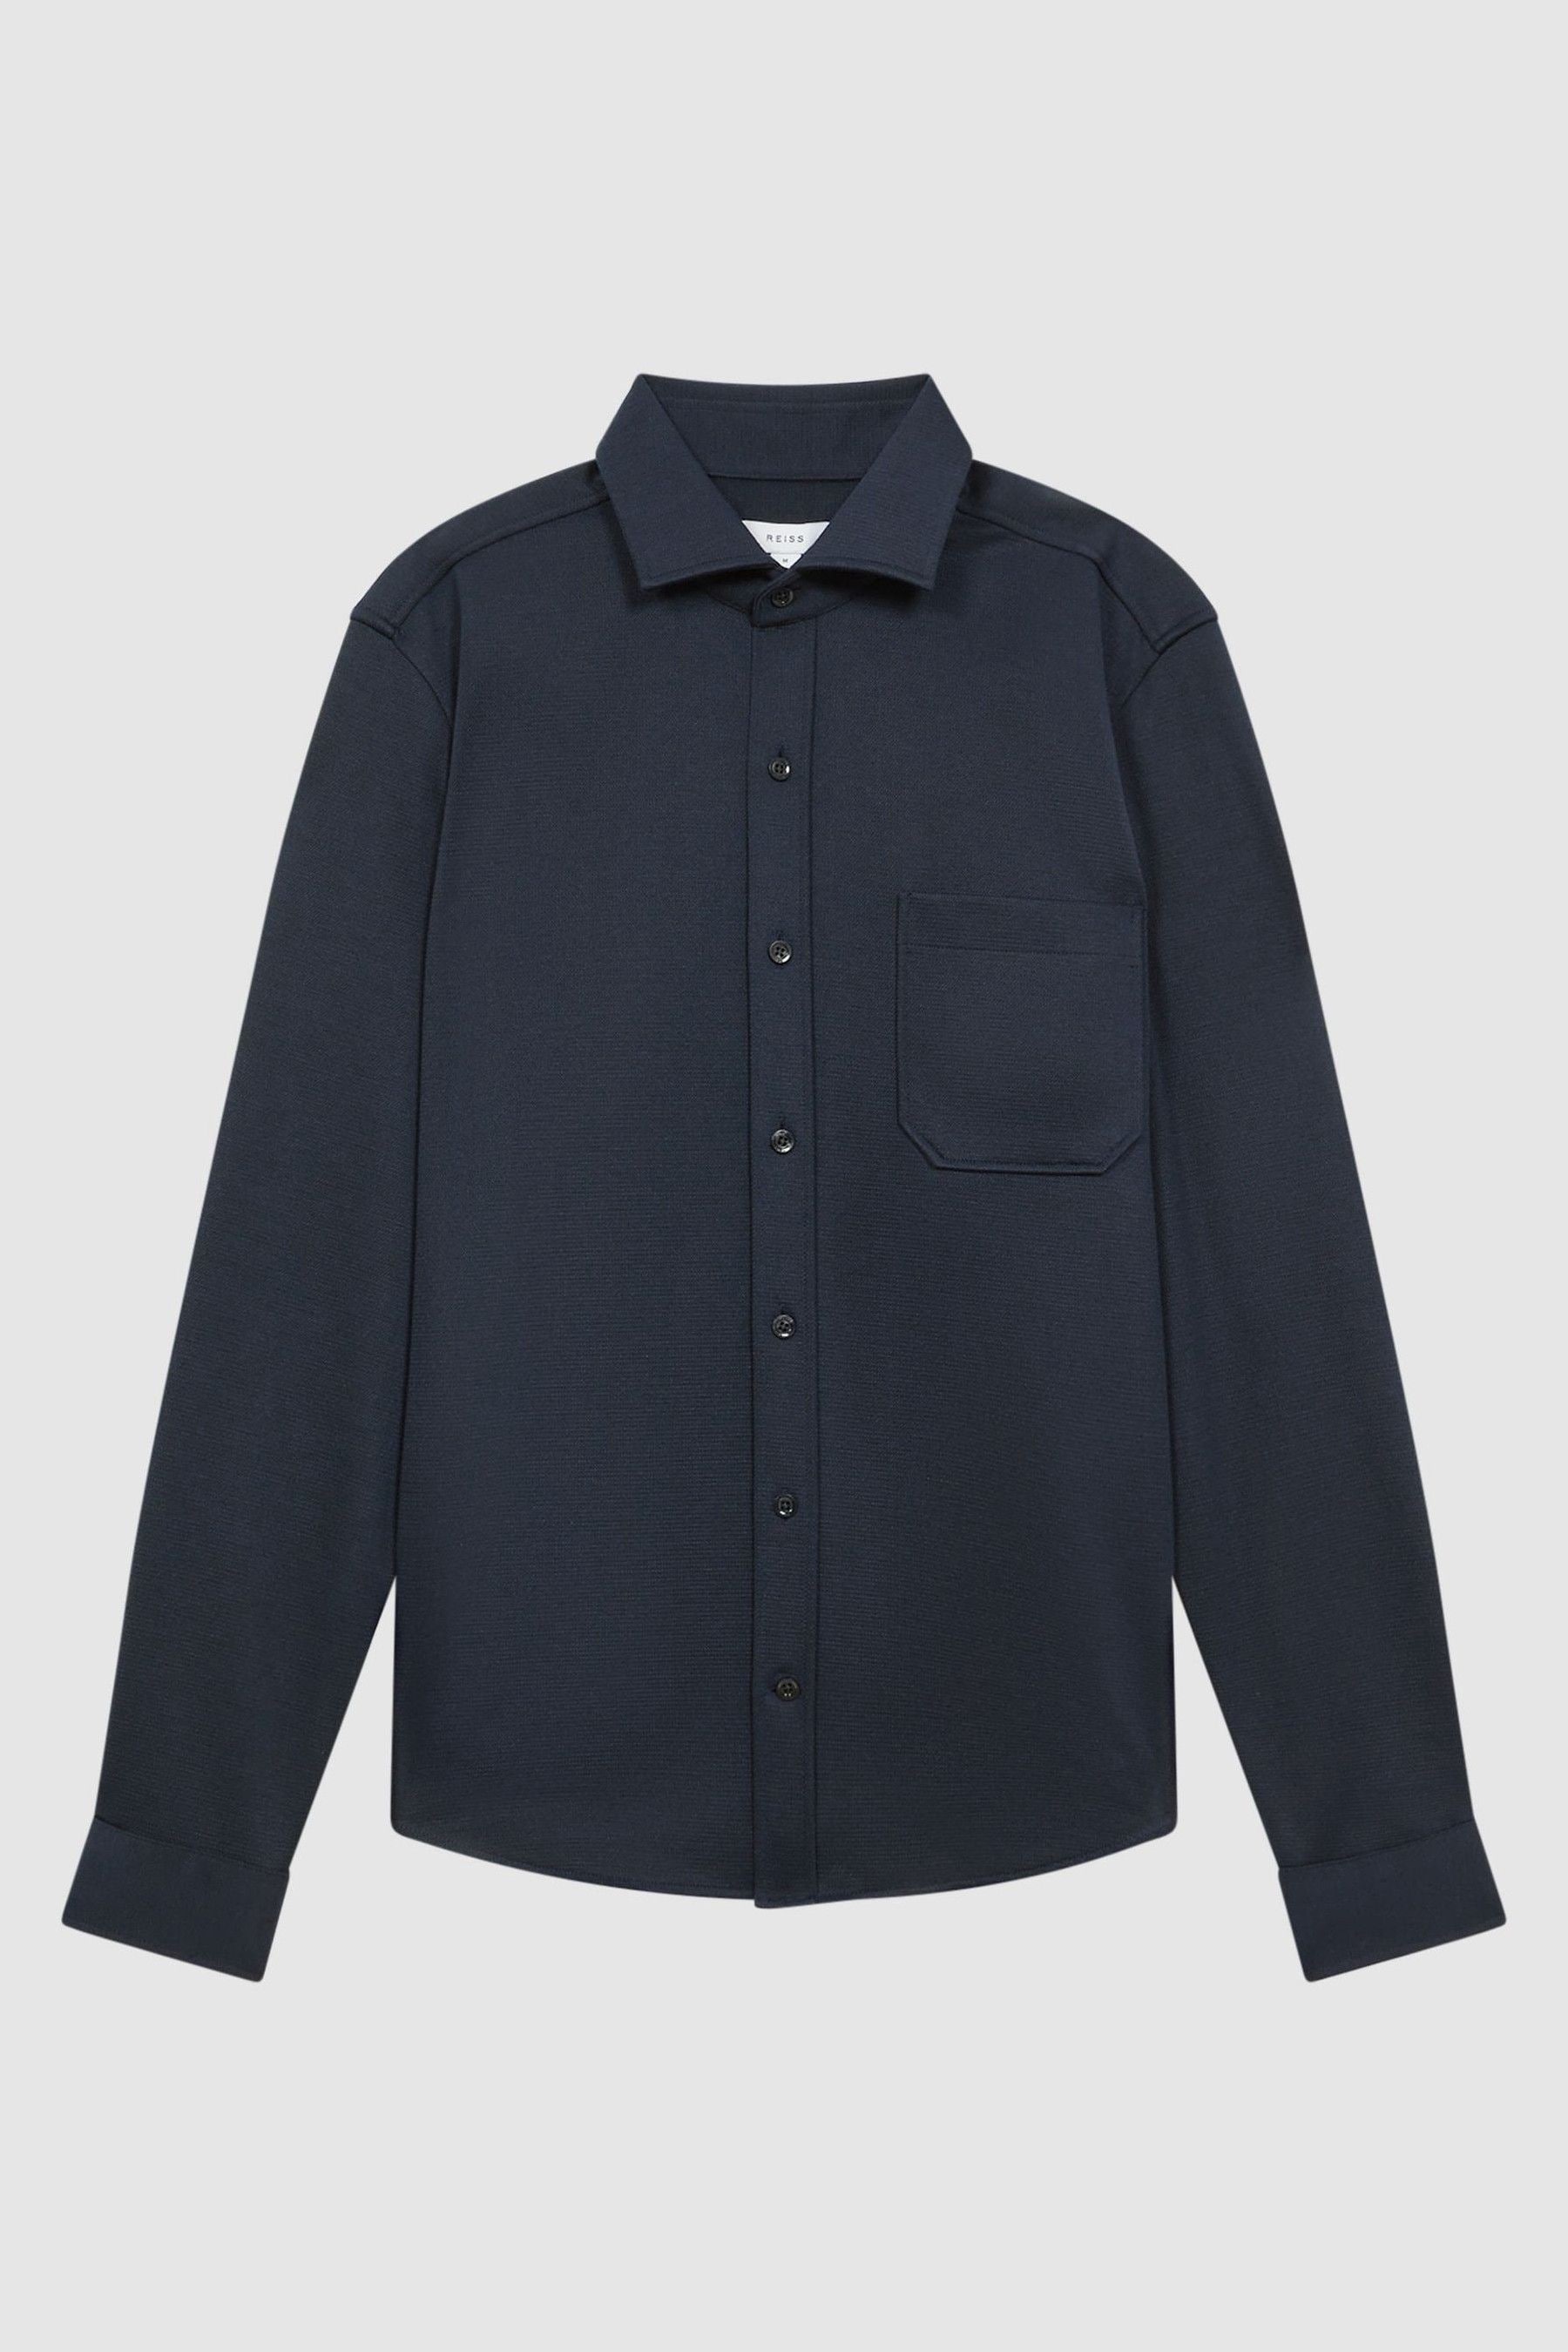 Buy Reiss Navy Moritz Textured Button-Through Overshirt from the Next ...